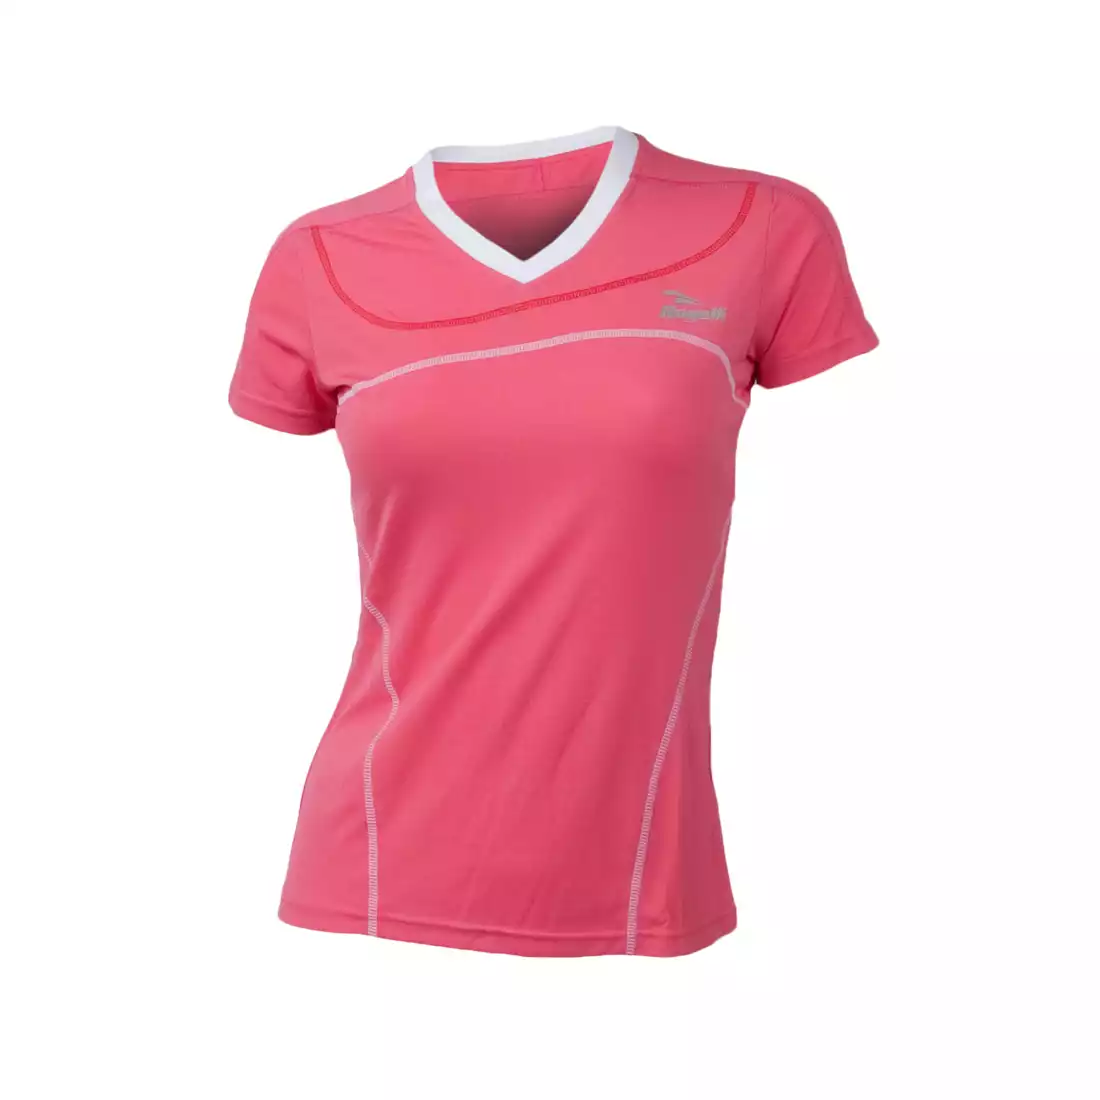 ROGELLI RUN - MIRAL - damska koszulka biegowa, kolor: Różowy